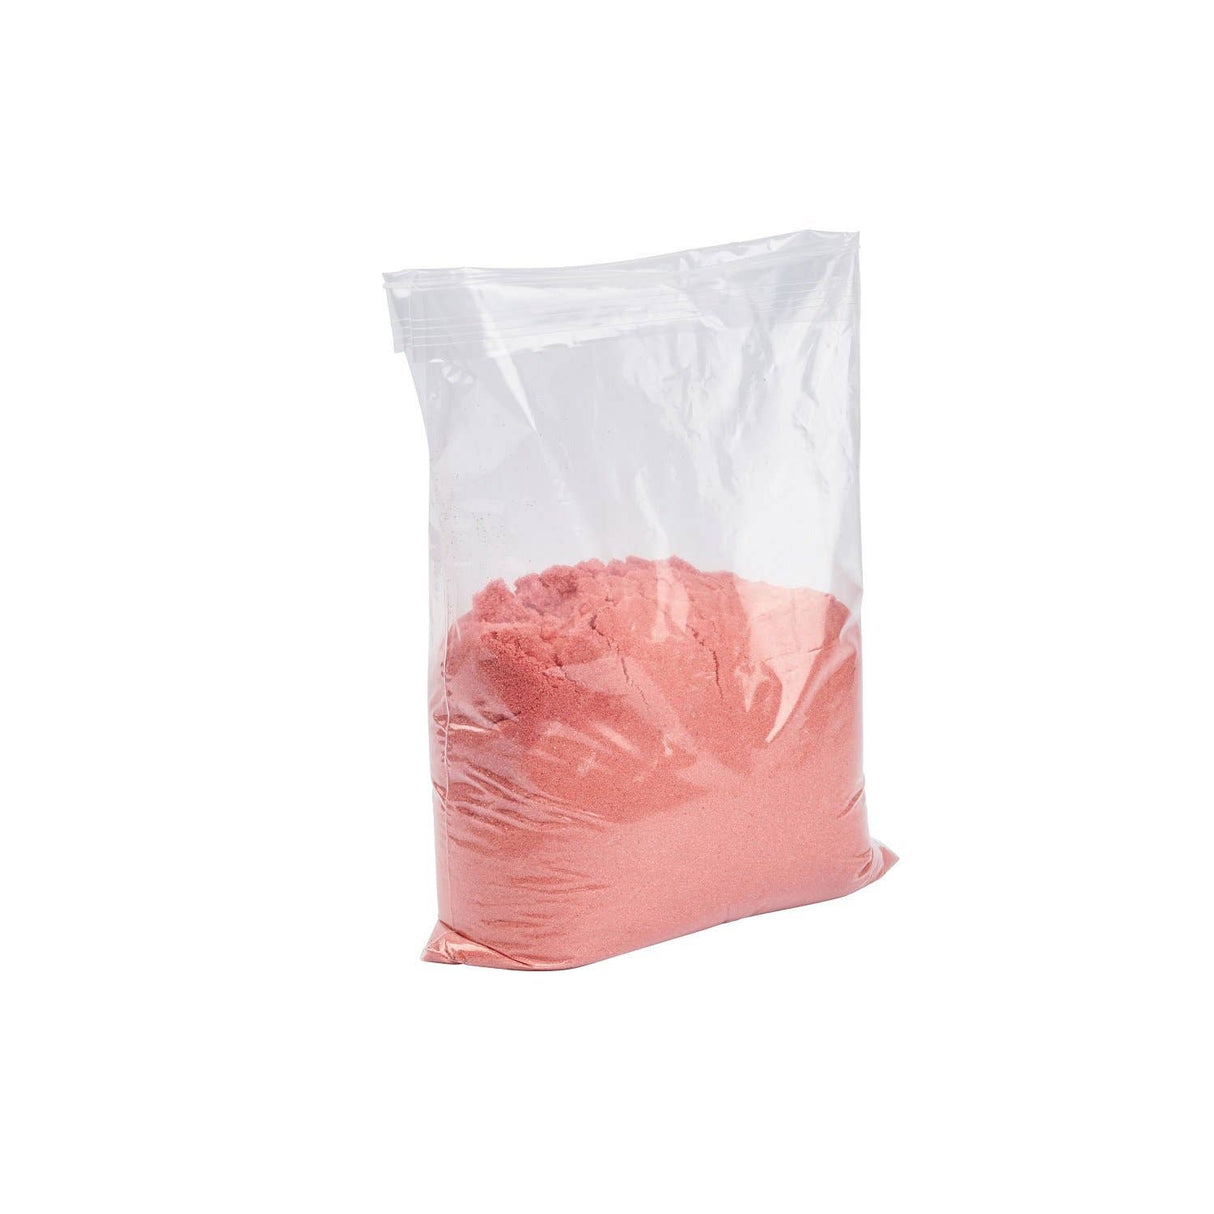 Bath Salts -Bulk (5 pound bag): Refill Bag fills 33+ shakers